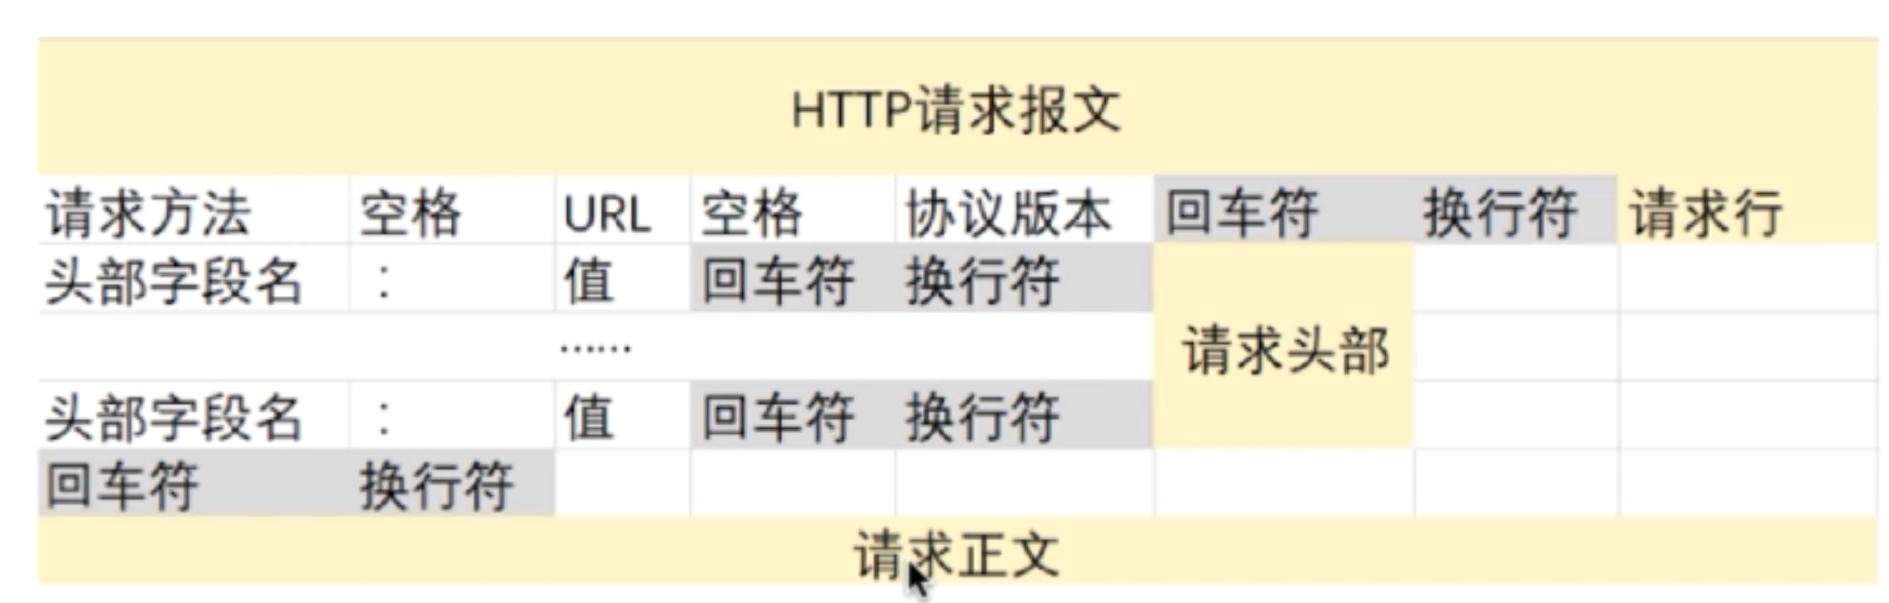 HTTP请求结构